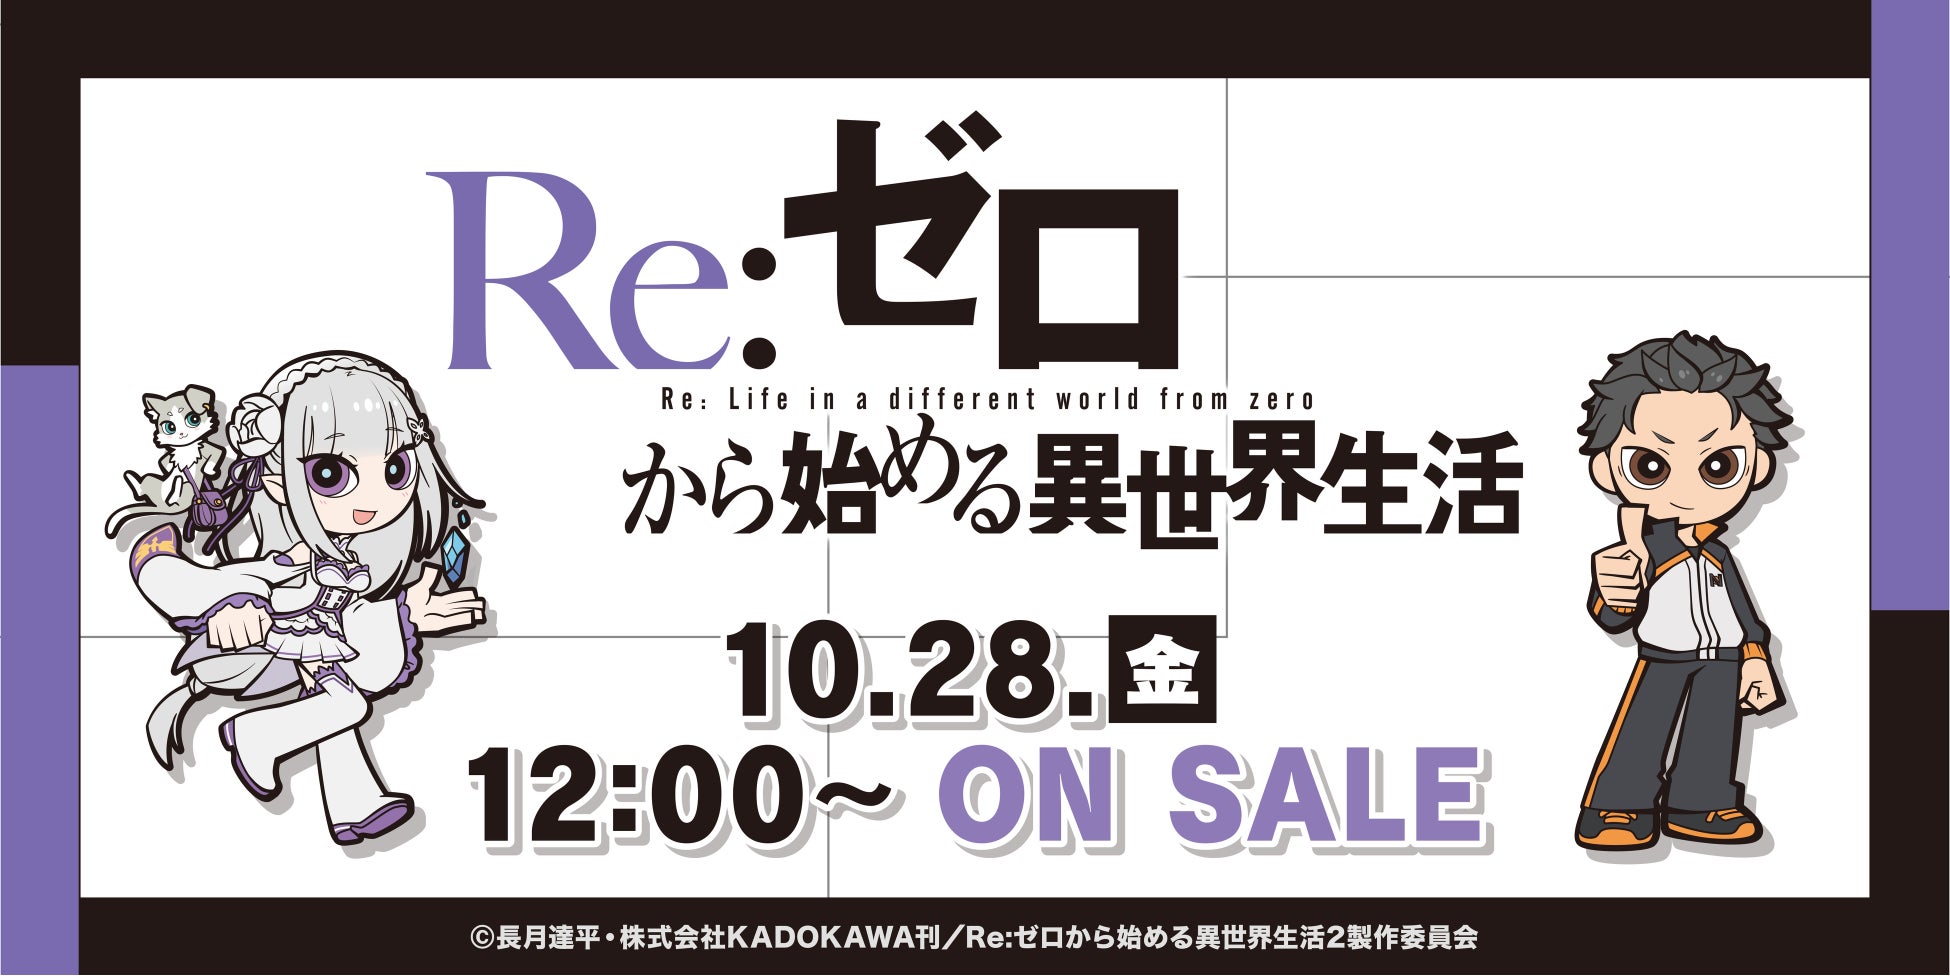 SHIBUYA SCRAMBLE FIGURE、TVアニメ『ソードアート・オンライン』「マザーズ・ロザリオ編」より「ユウキ」「アスナ」が1/7スケールフィギュアとなって発売決定！